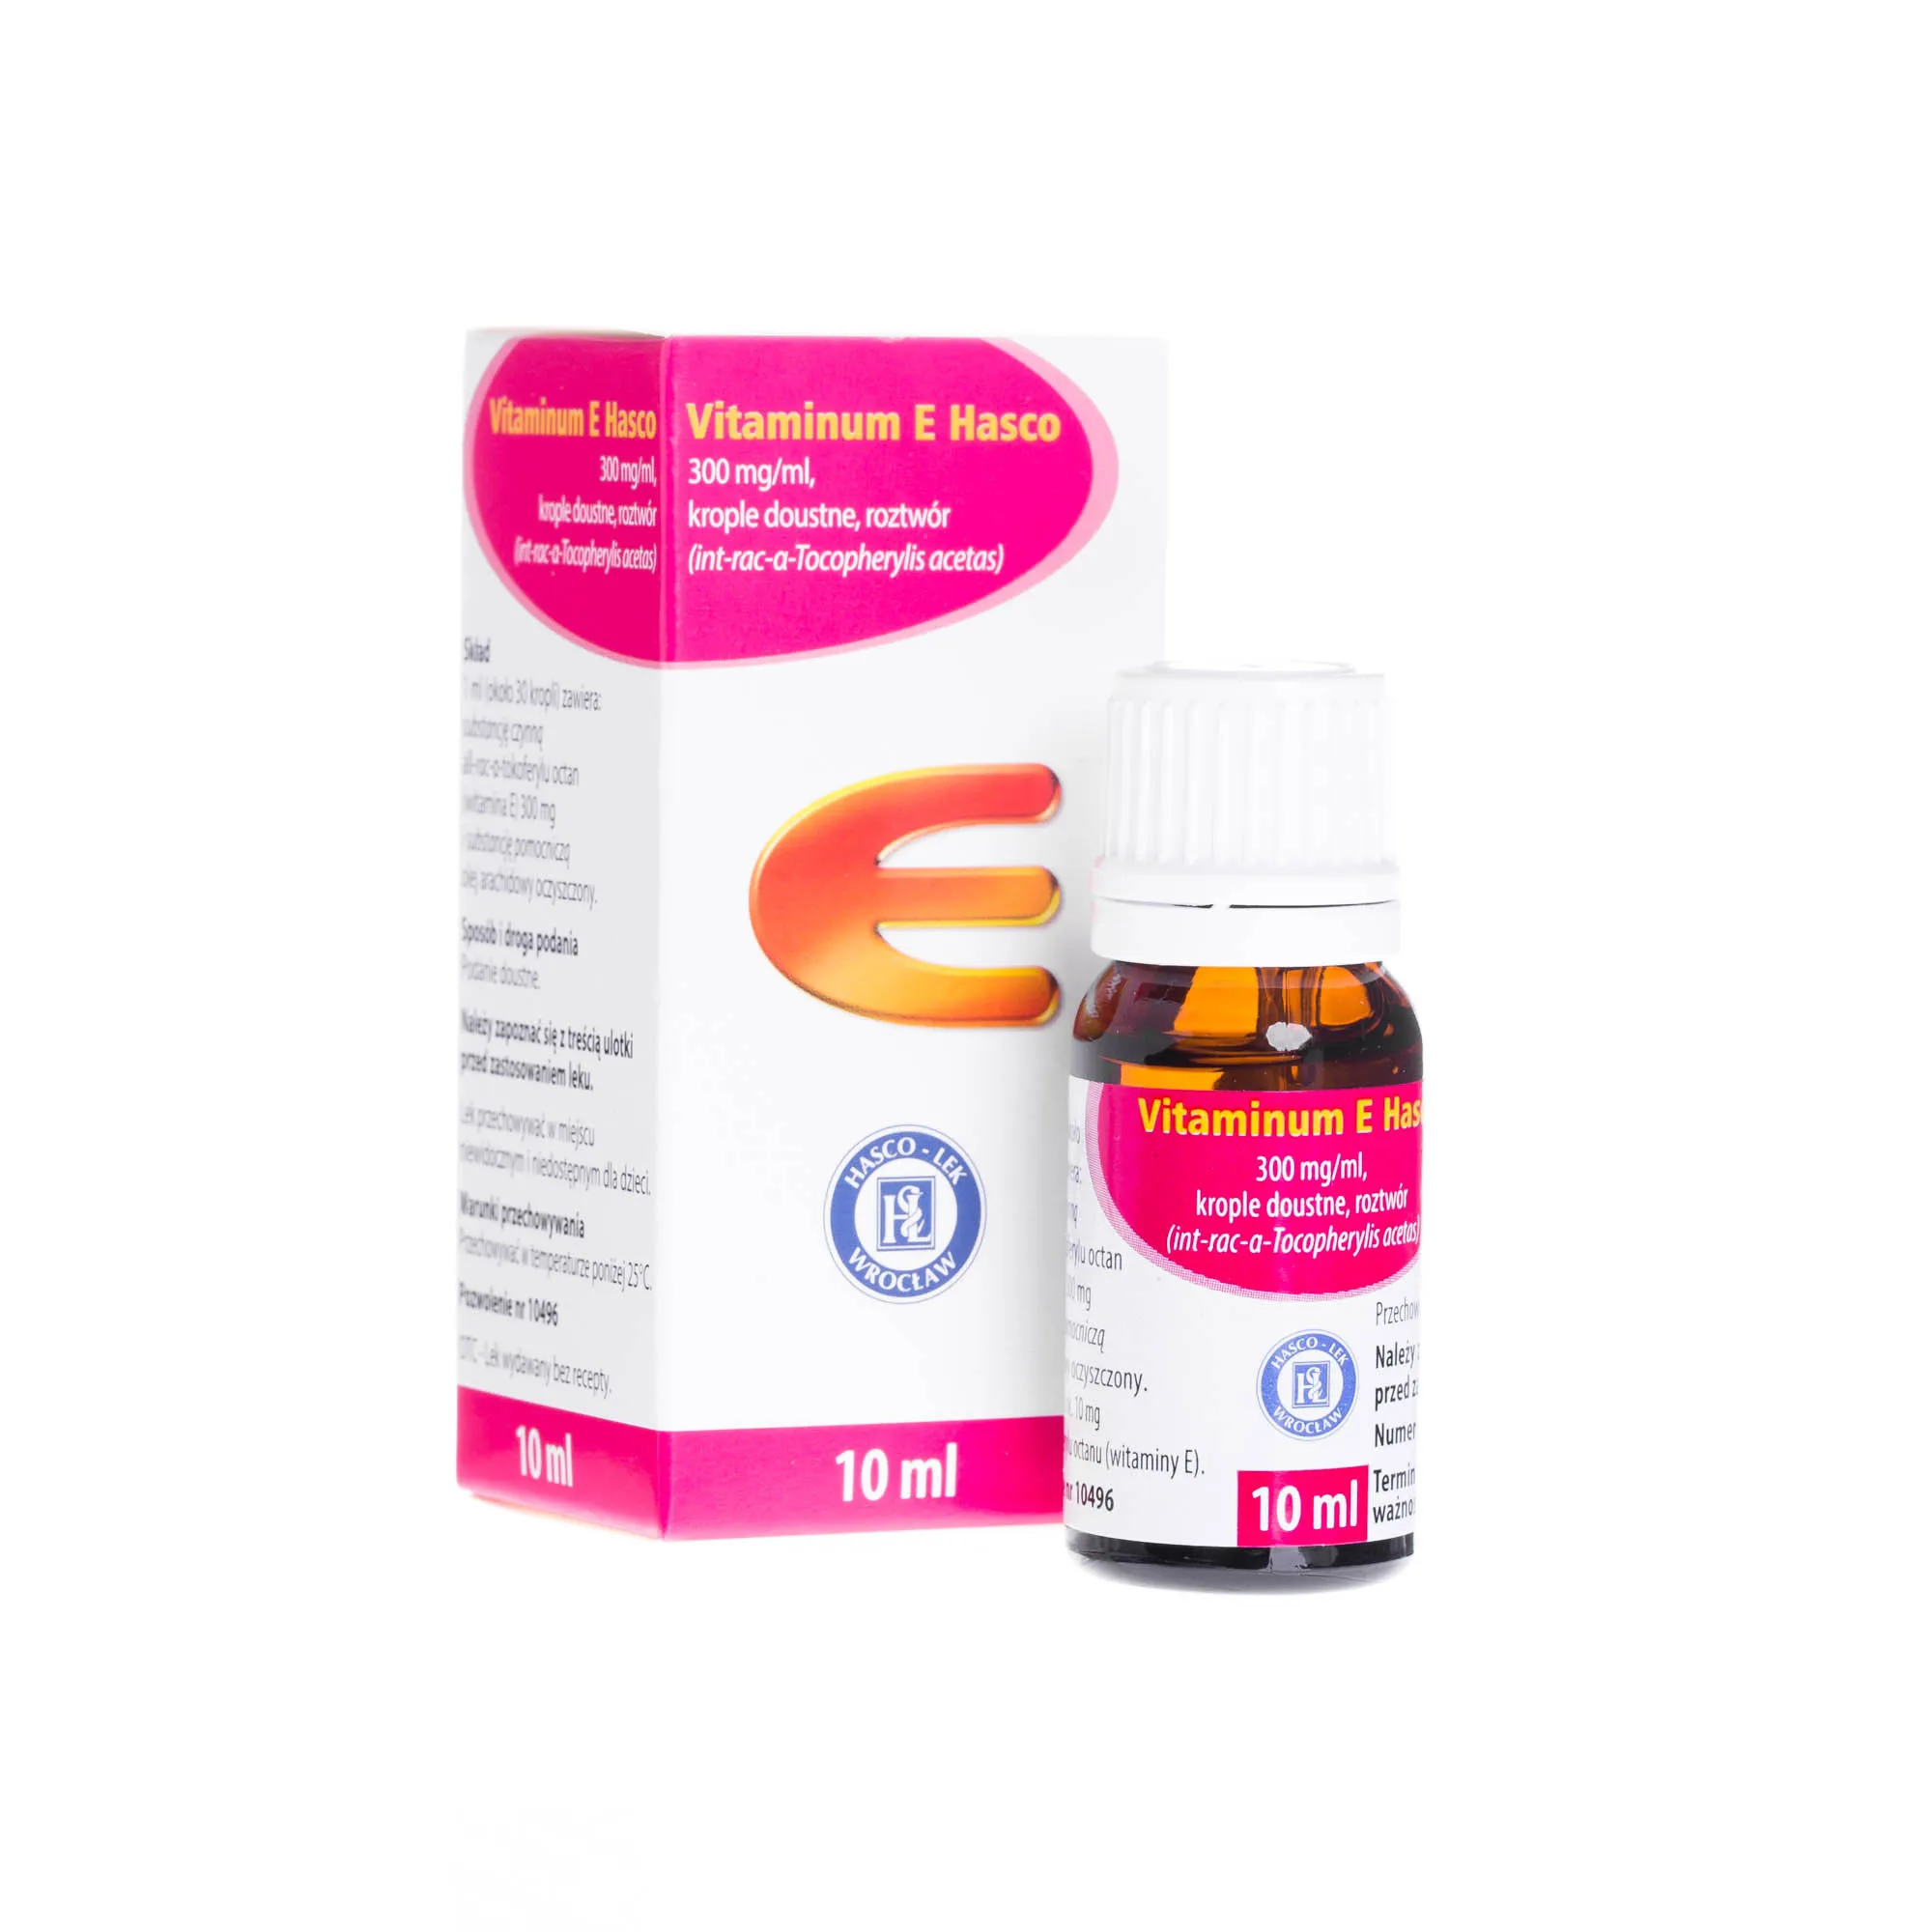 Vitaminum E Hasco 300 mg/ml - krople doustne